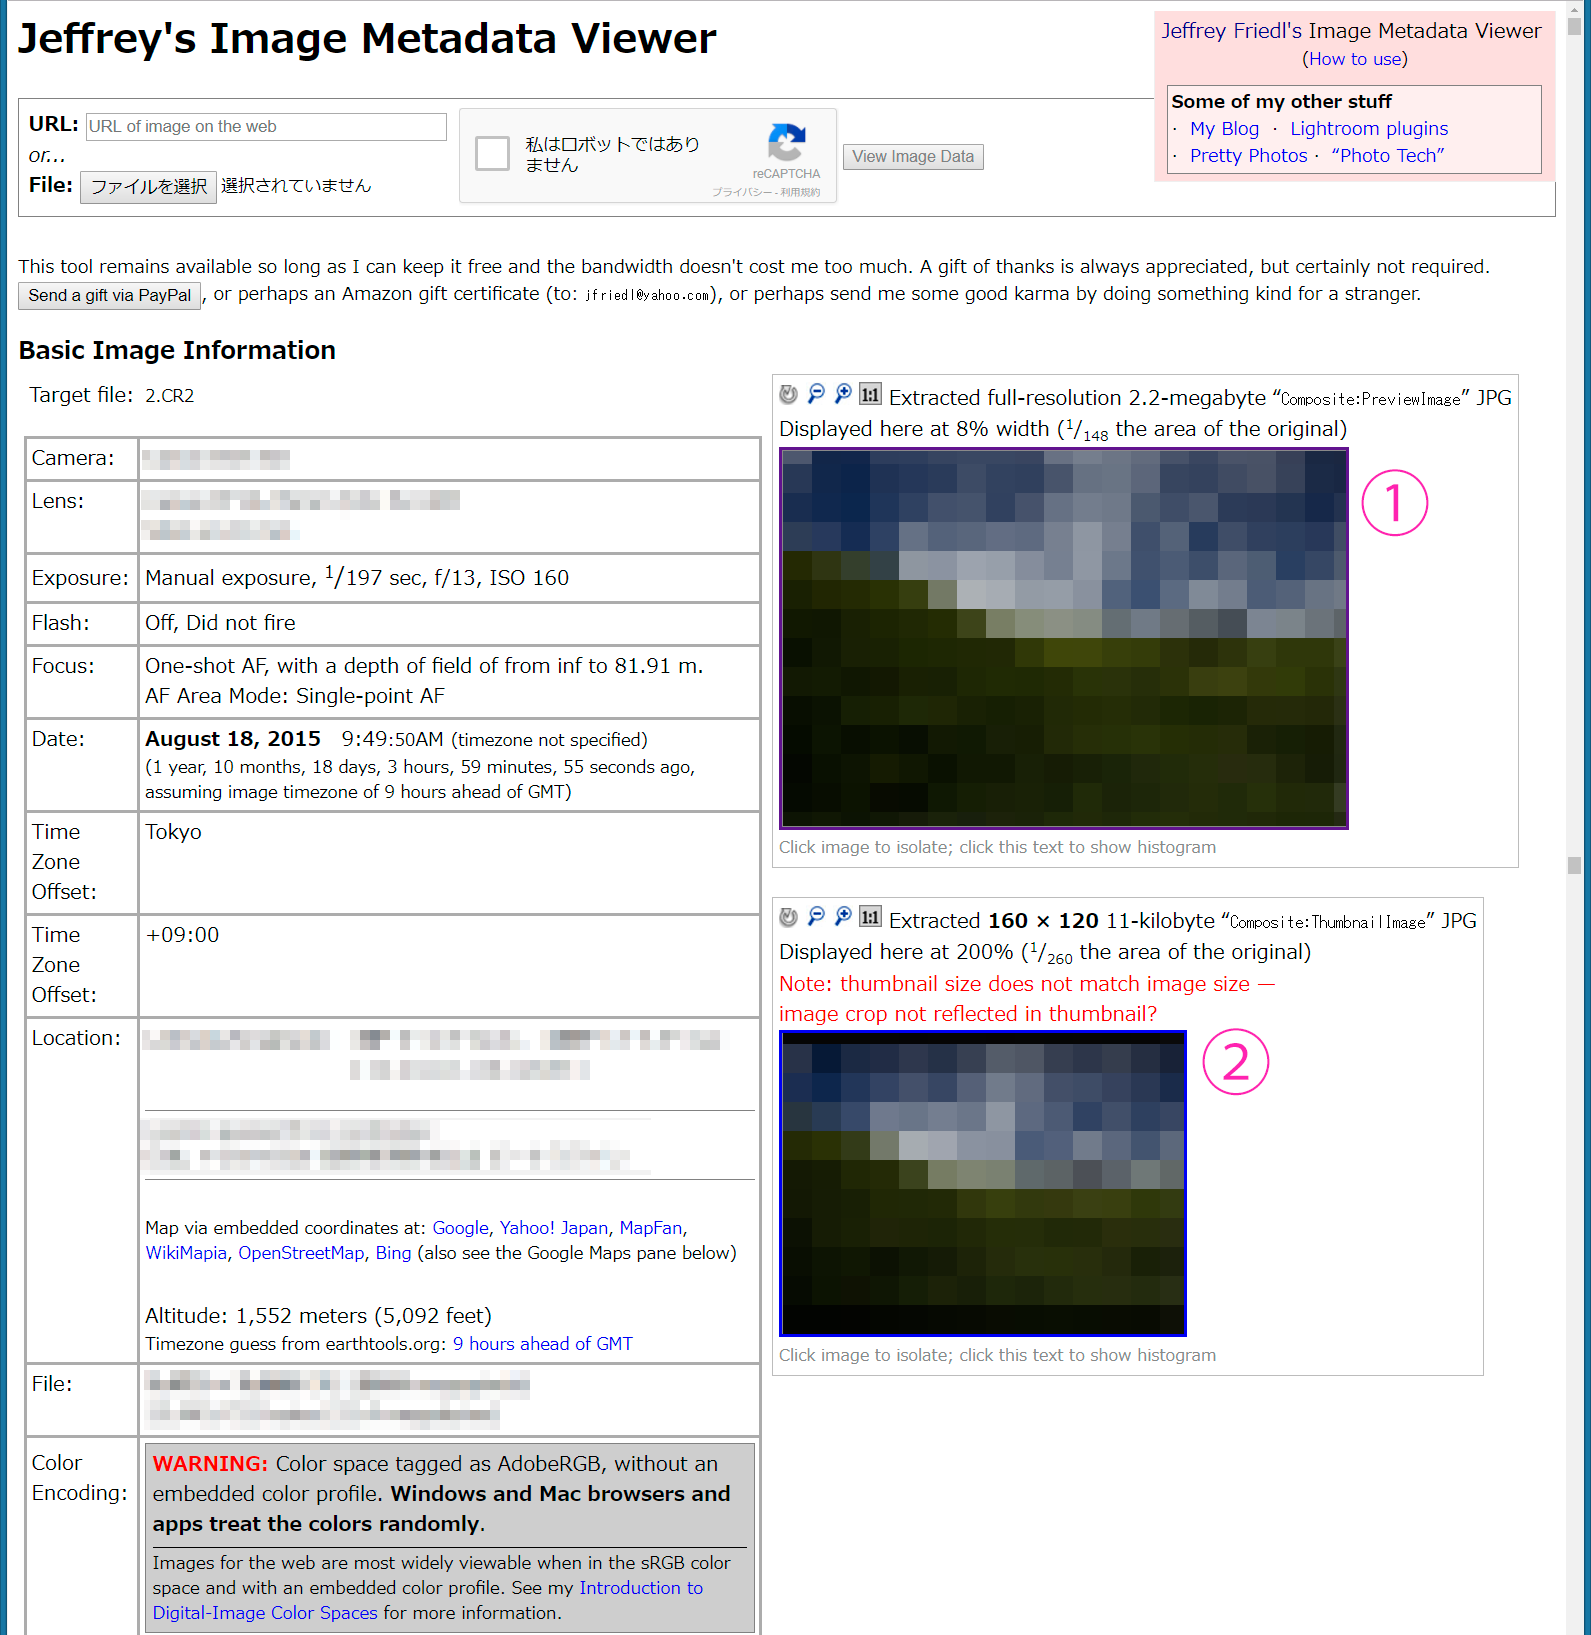 Jefferys_Image_Medata_Viewer2